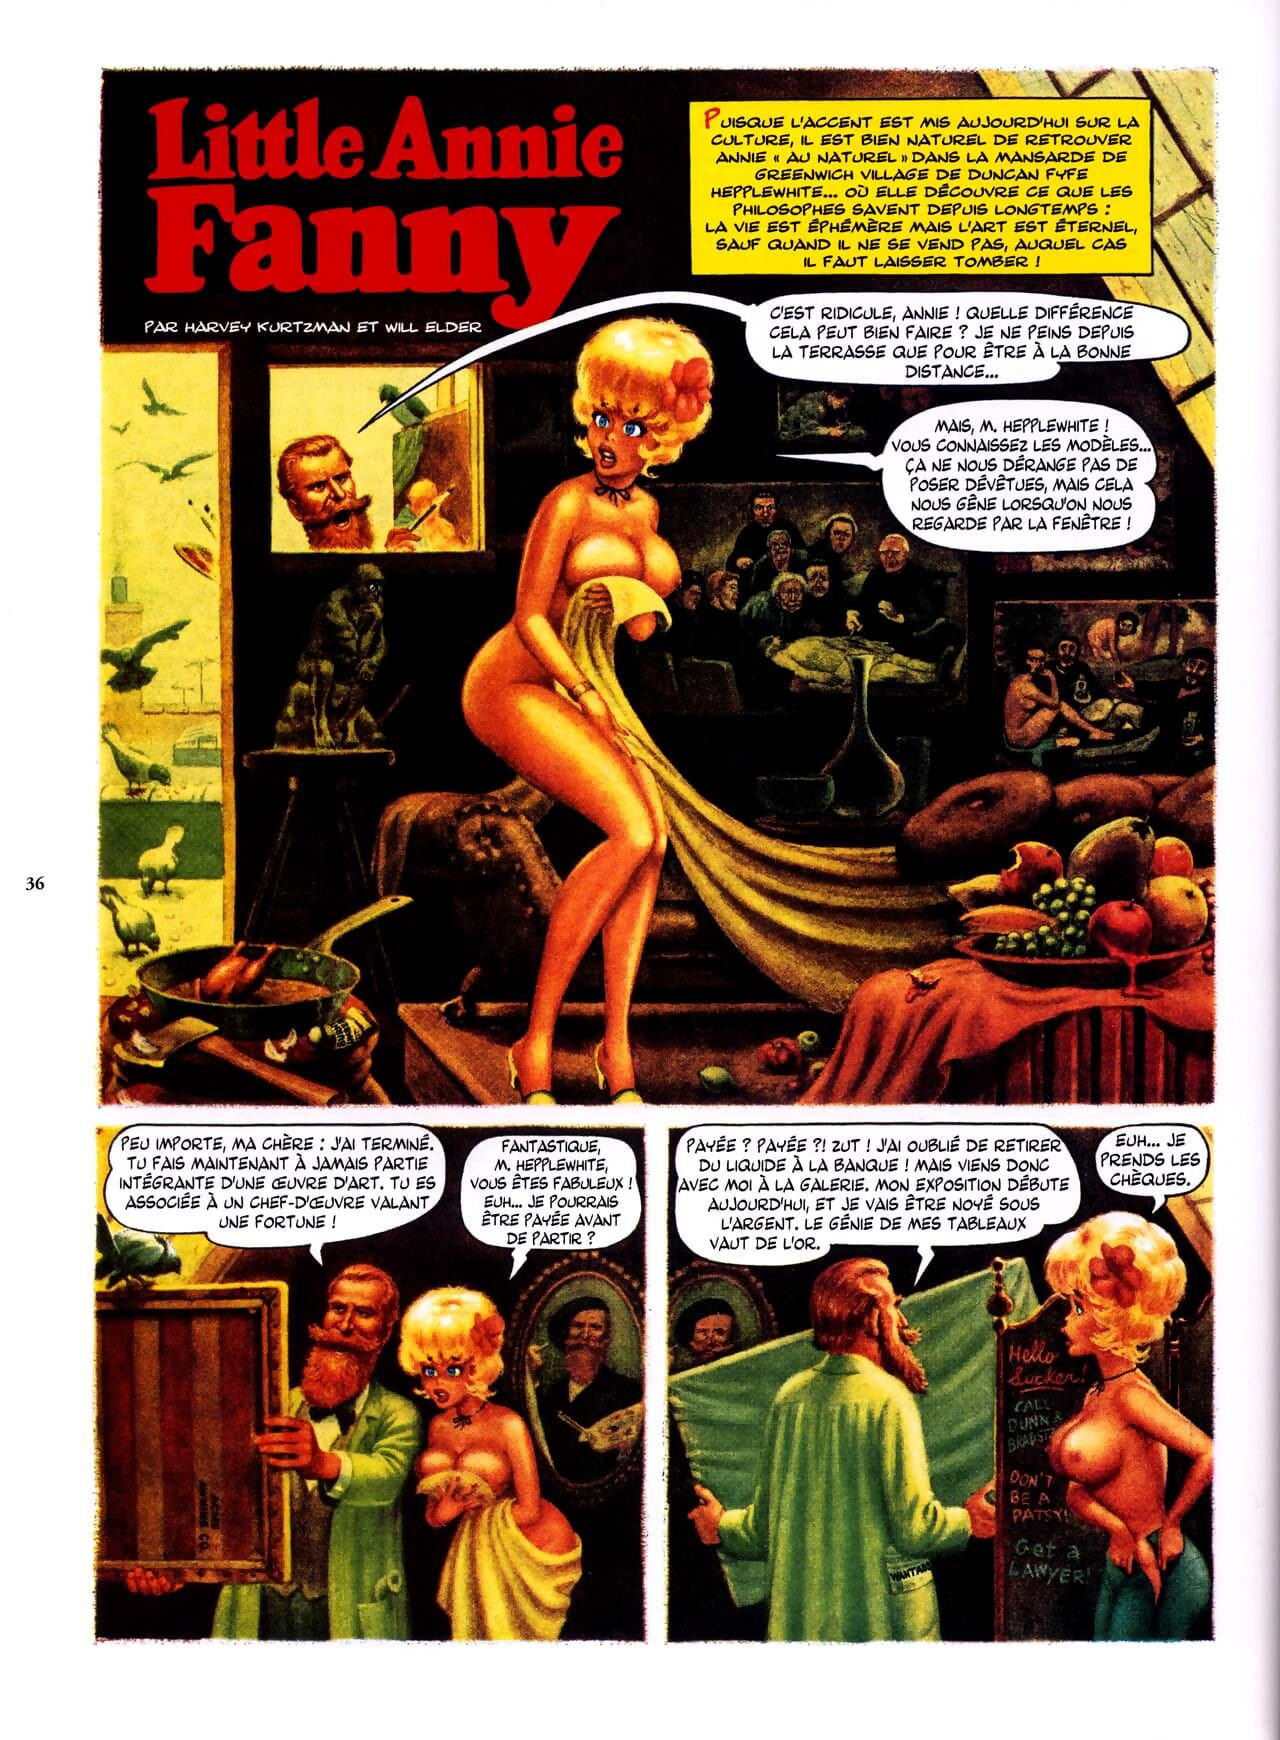 Playboys Little Annie Fanny Vol. 1 - 1962-1965 - part 2 page 1